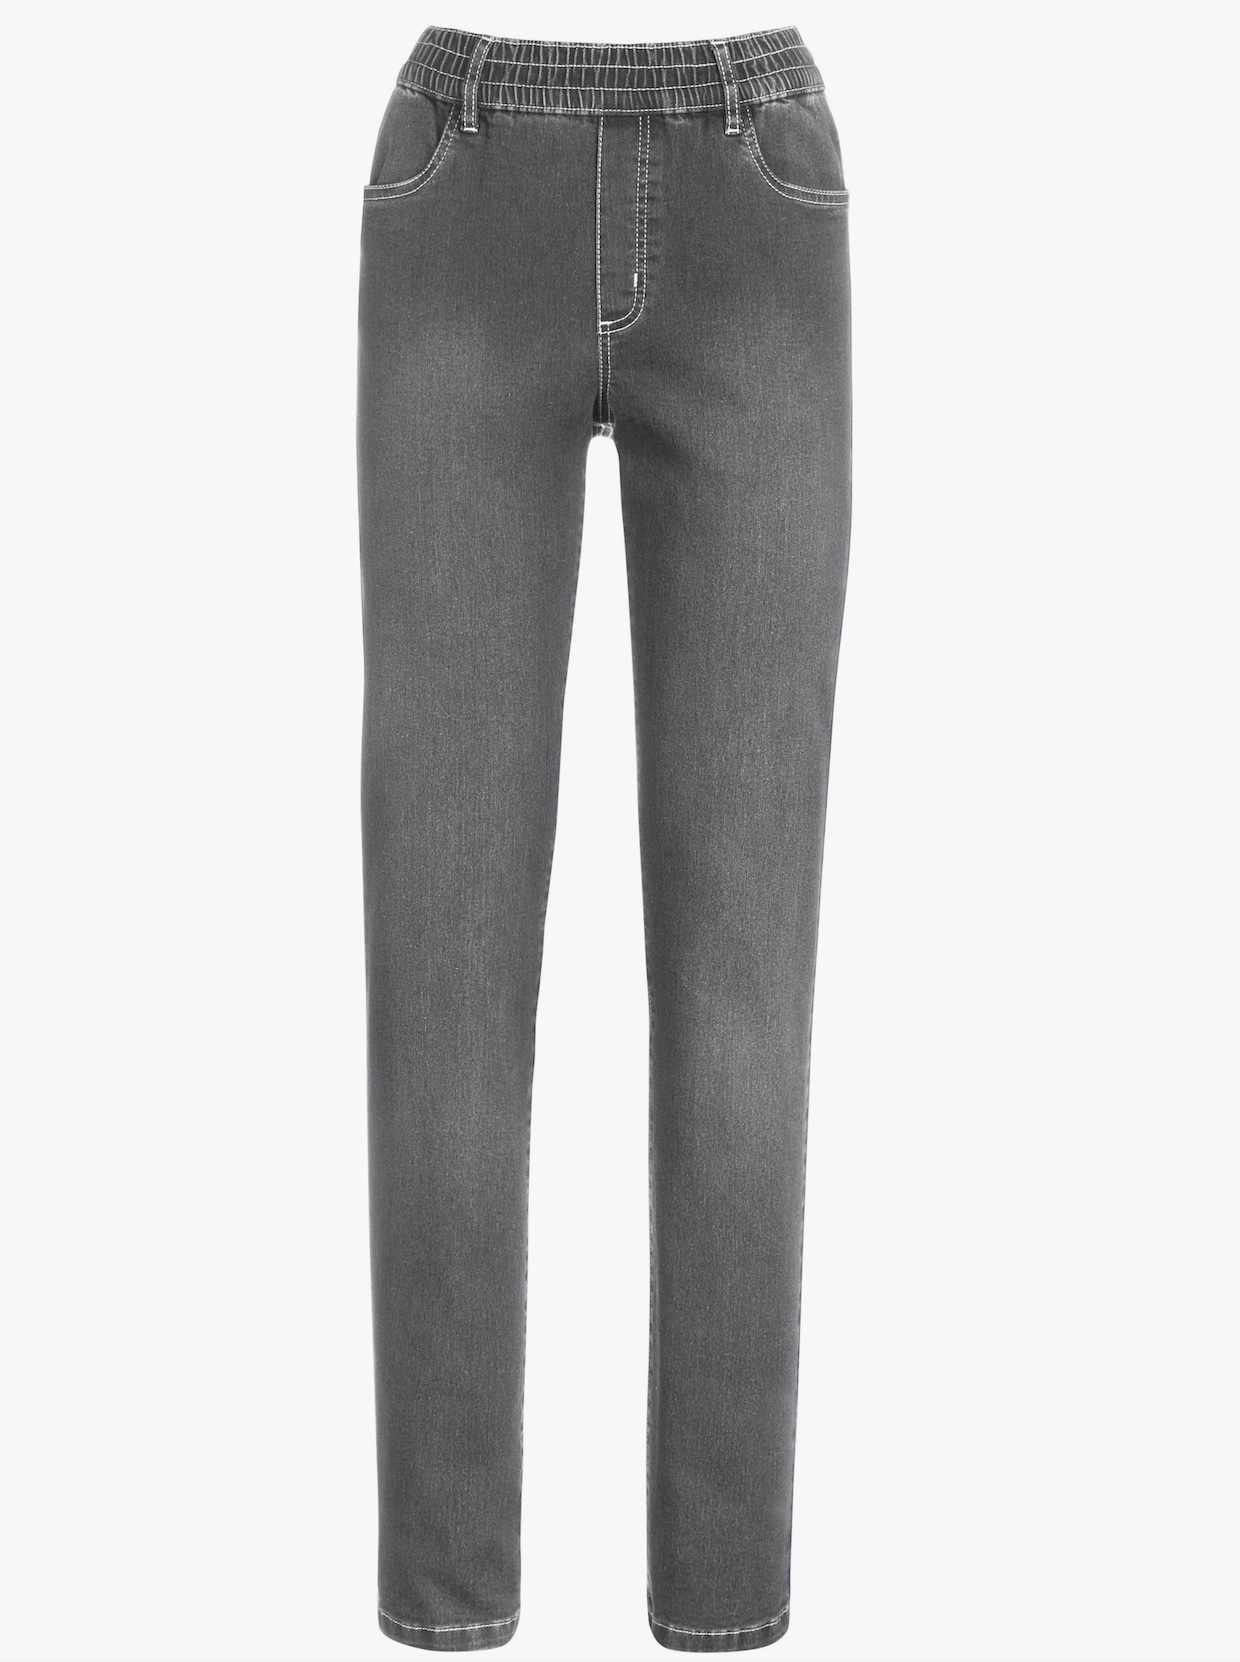 High waist jeans - grey-denim